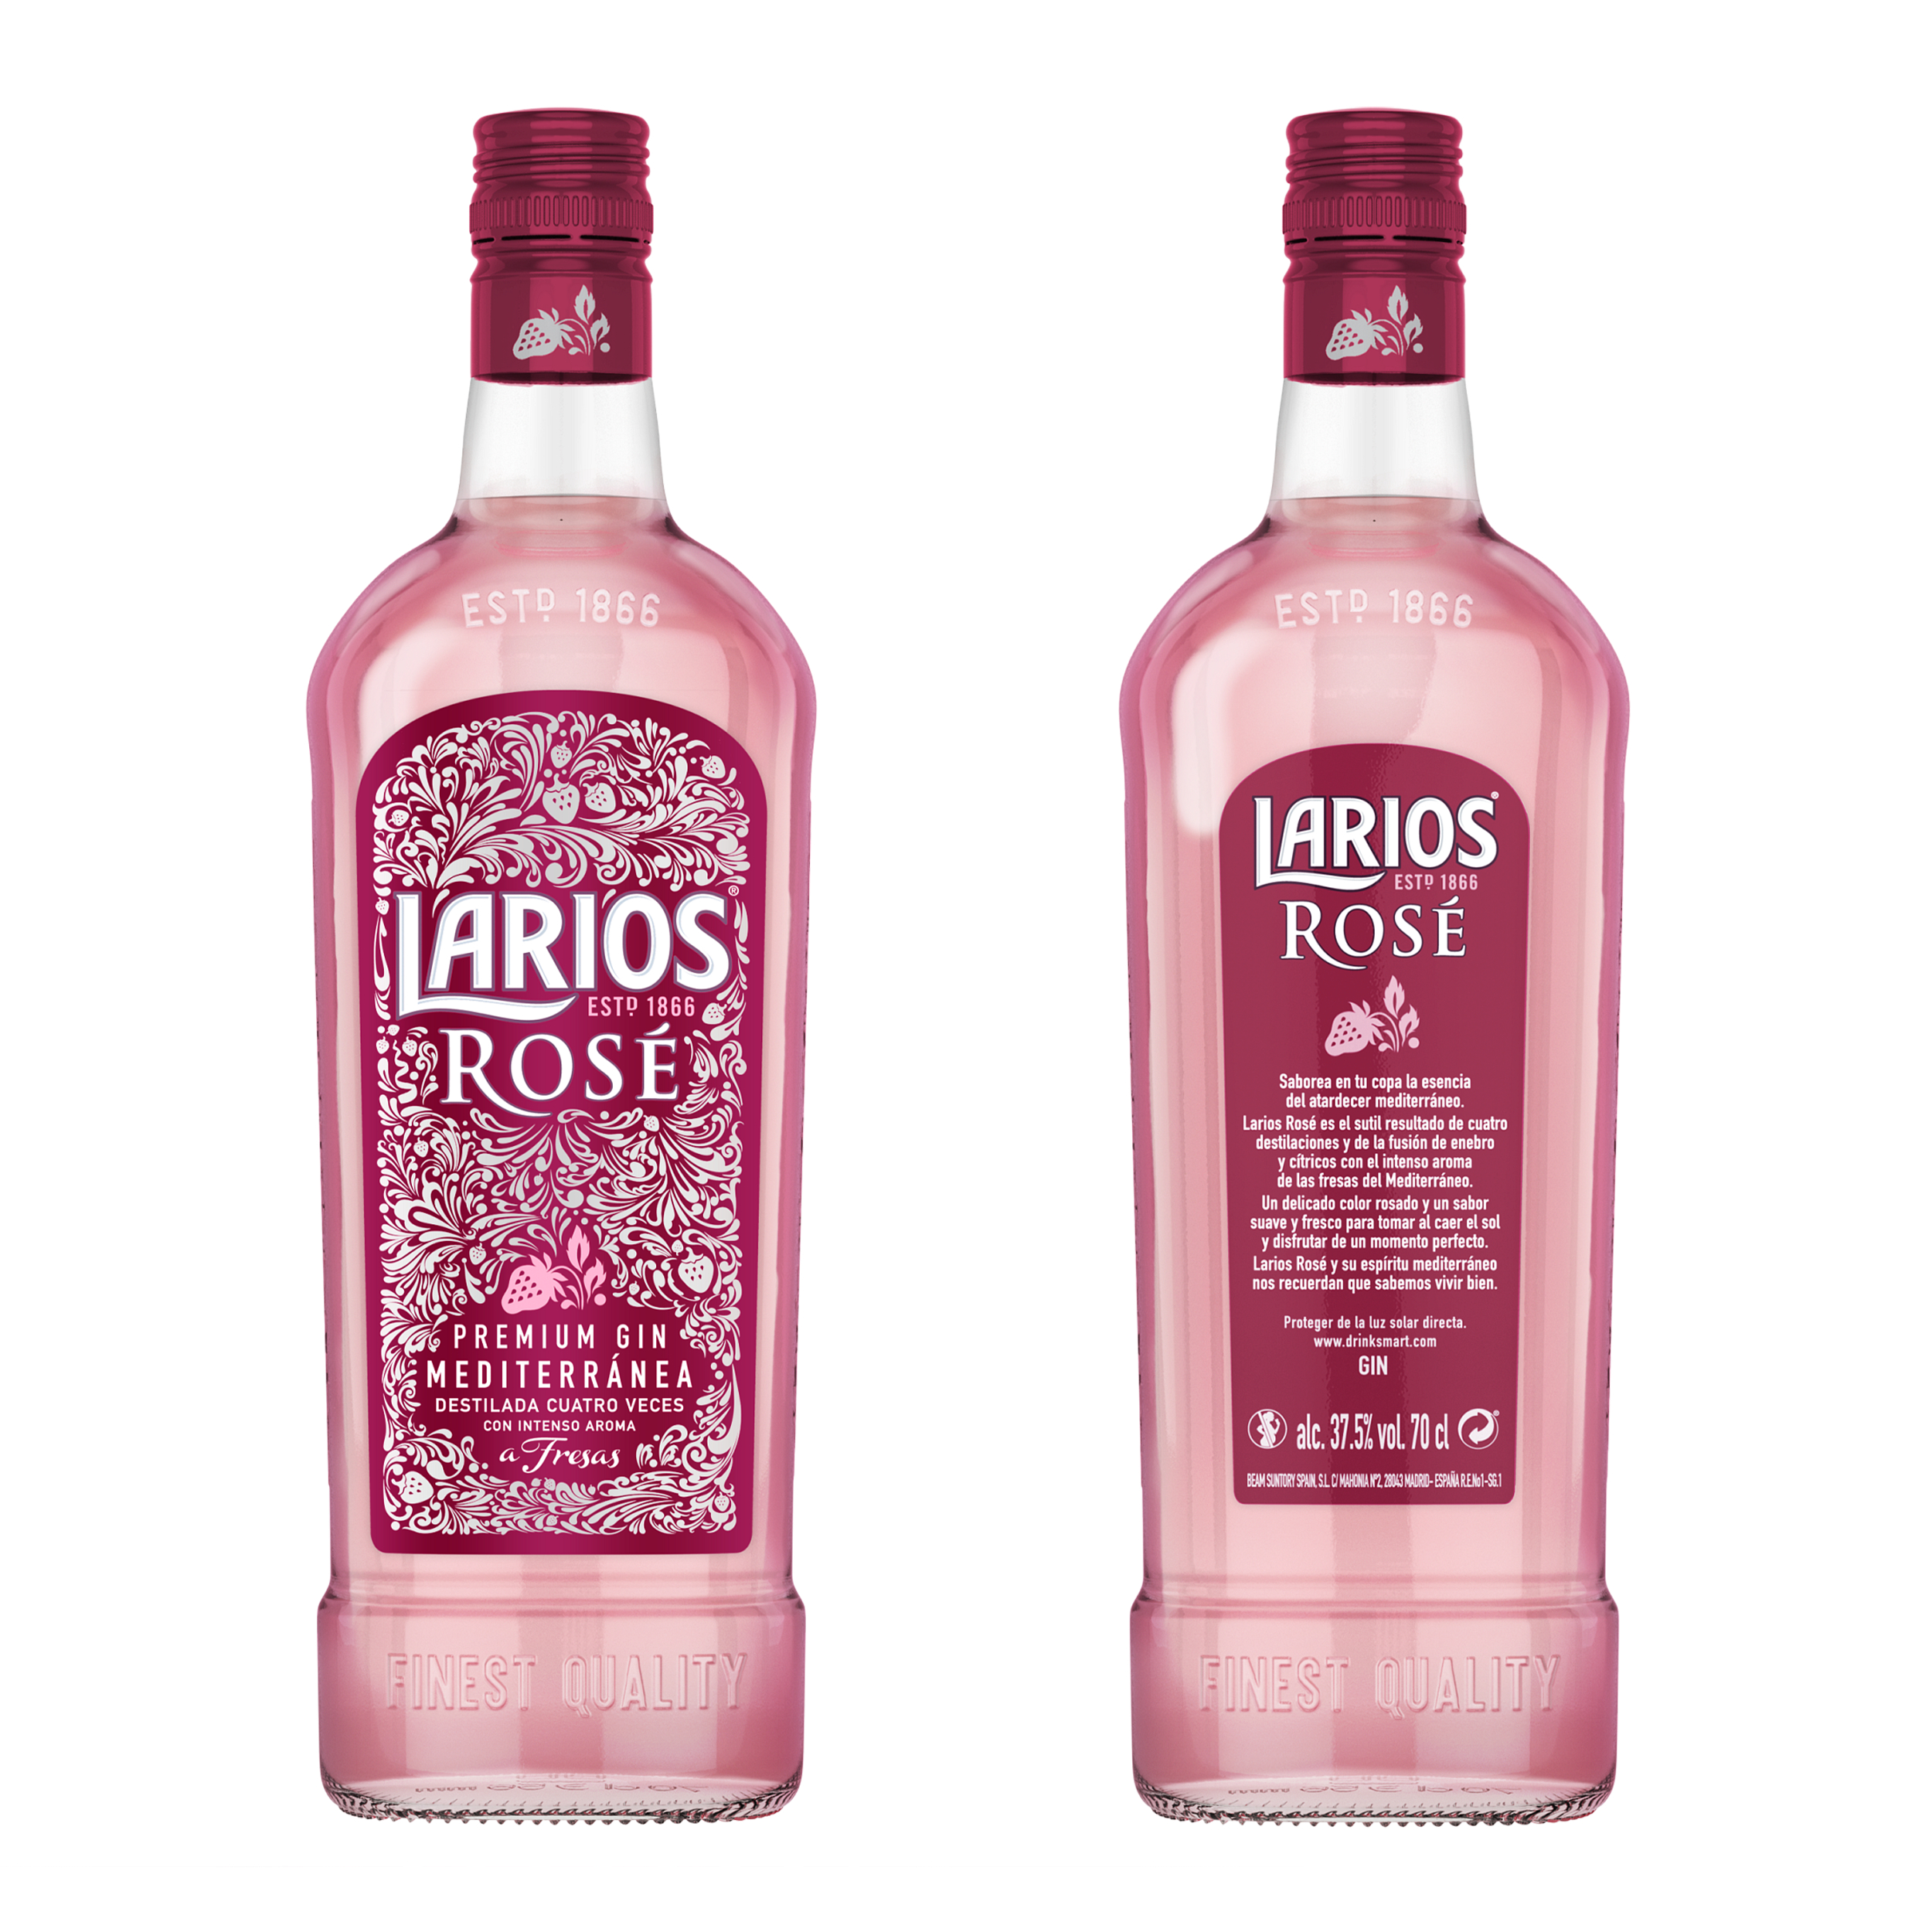 Джин Larios Rose Premium Gin, 37,5%, 0,7 л + келих - фото 4